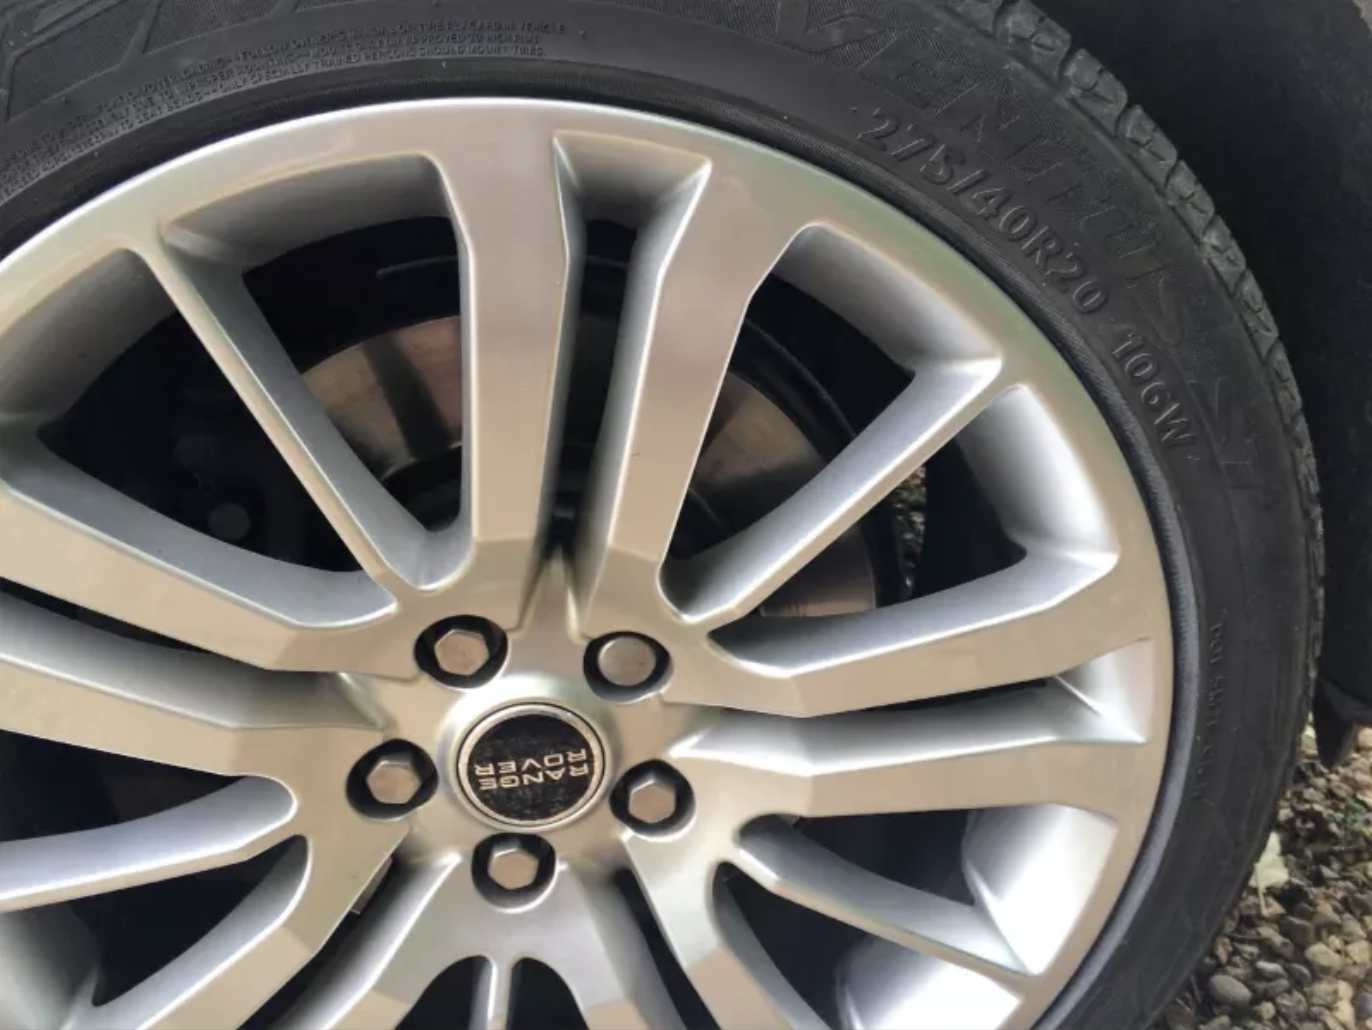 As new alloy wheel repair